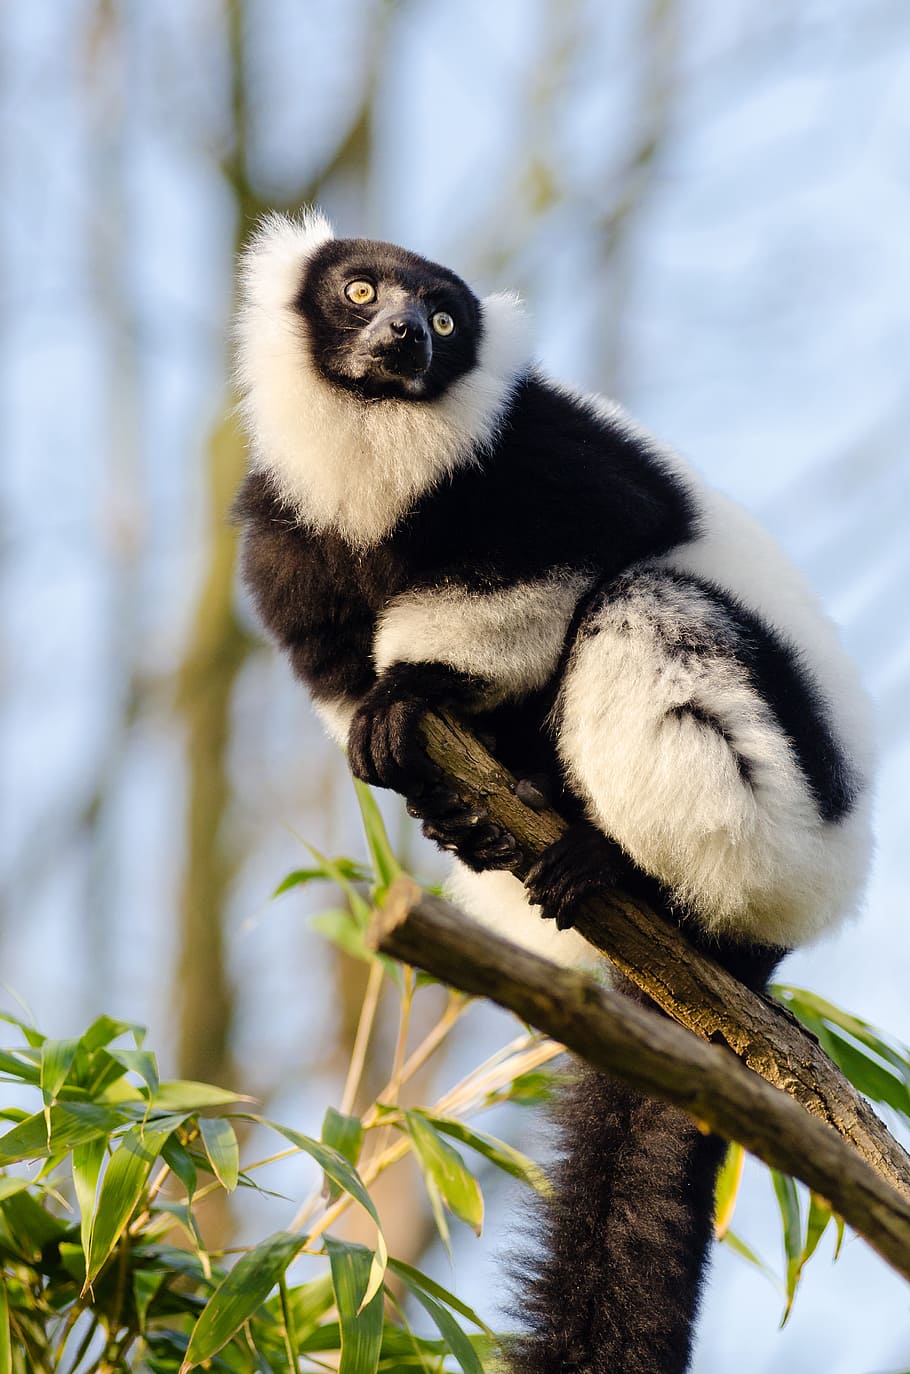 Hitam, putih, Ruffed Lemur, lemur putih dan hitam, tema binatang, satu hewan, hewan, pohon, bertulang belakang, satwa liar